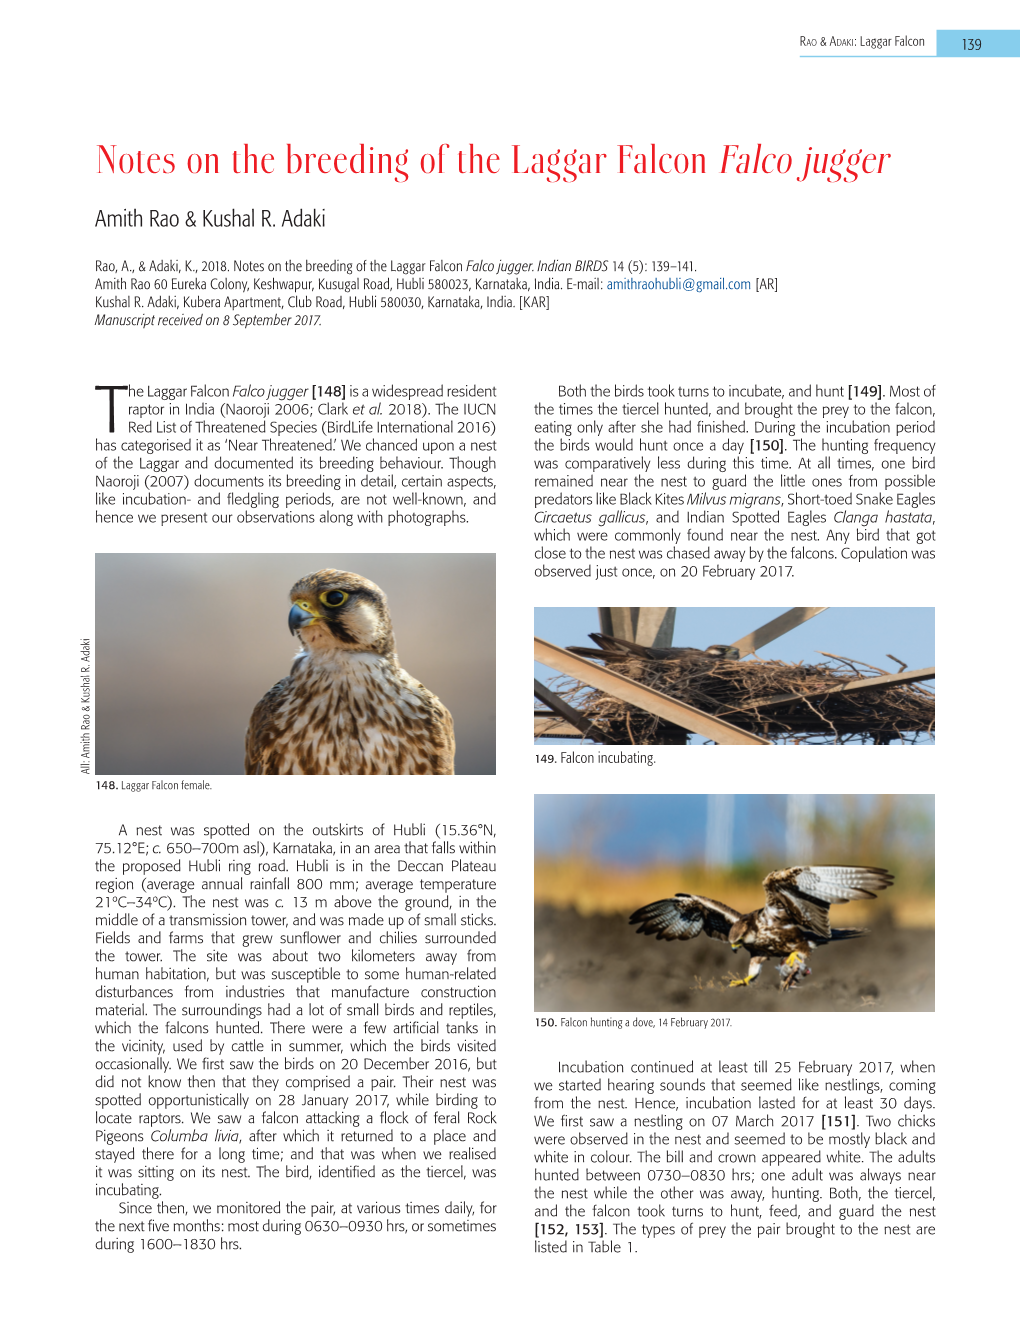 Notes on the Breeding of the Laggar Falcon Falco Jugger